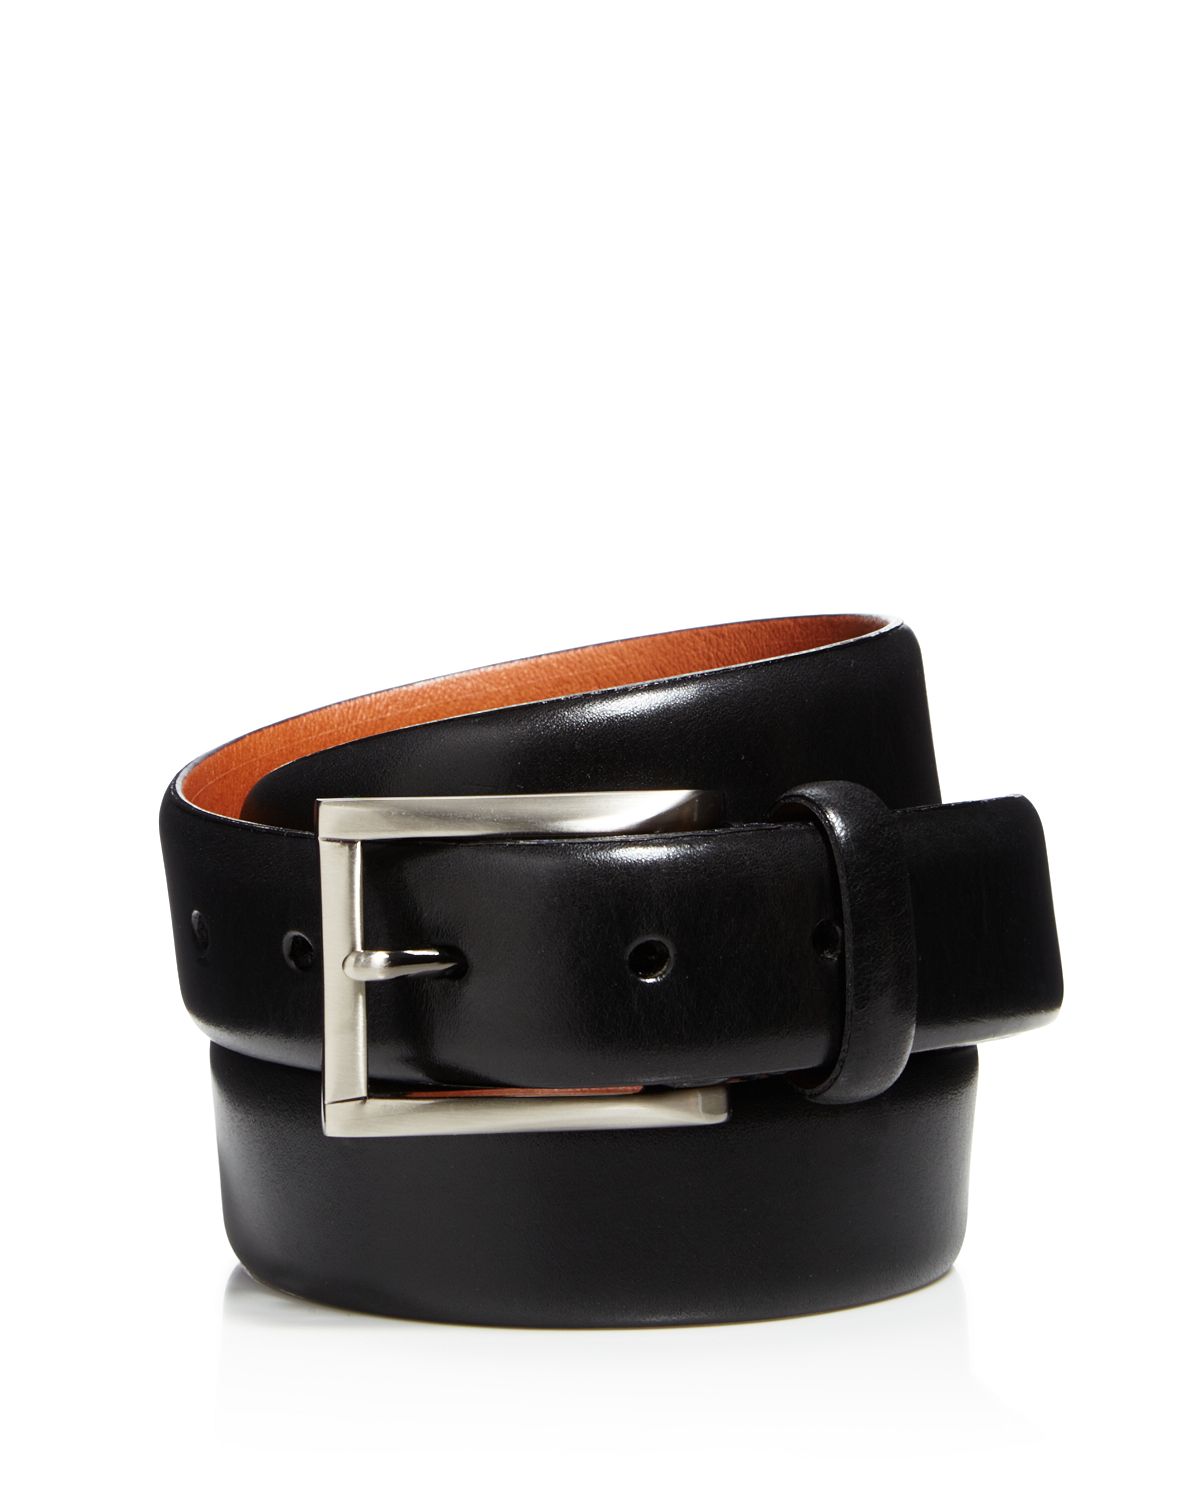 Trafalgar Marco Leather Belt Black